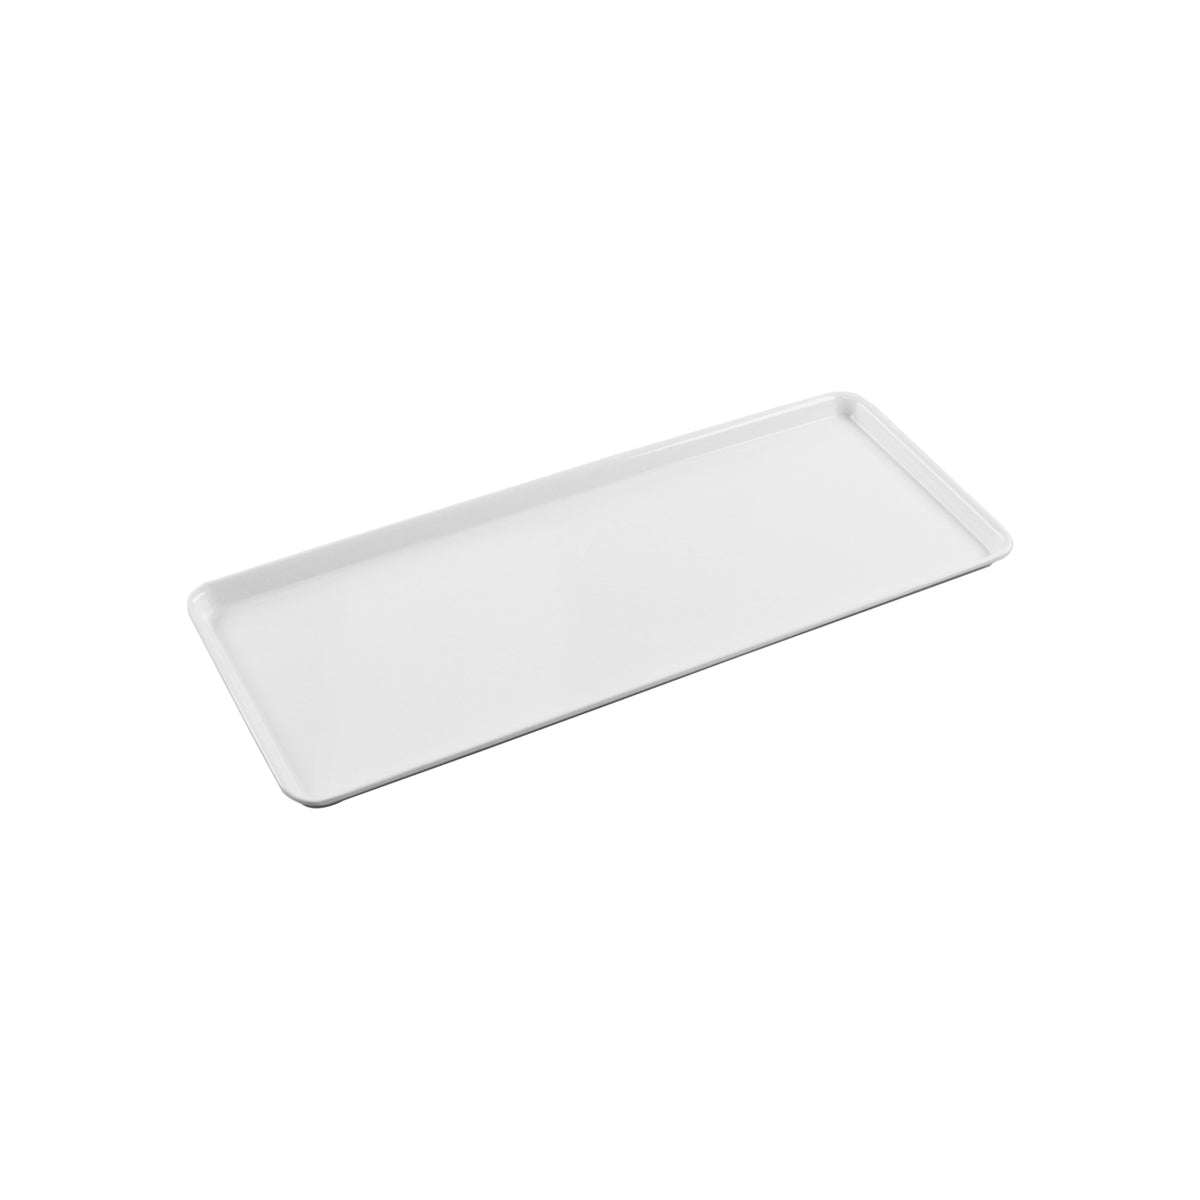 49026 Superware White Rectangular Platter 500x180mm Tomkin Australia Hospitality Supplies